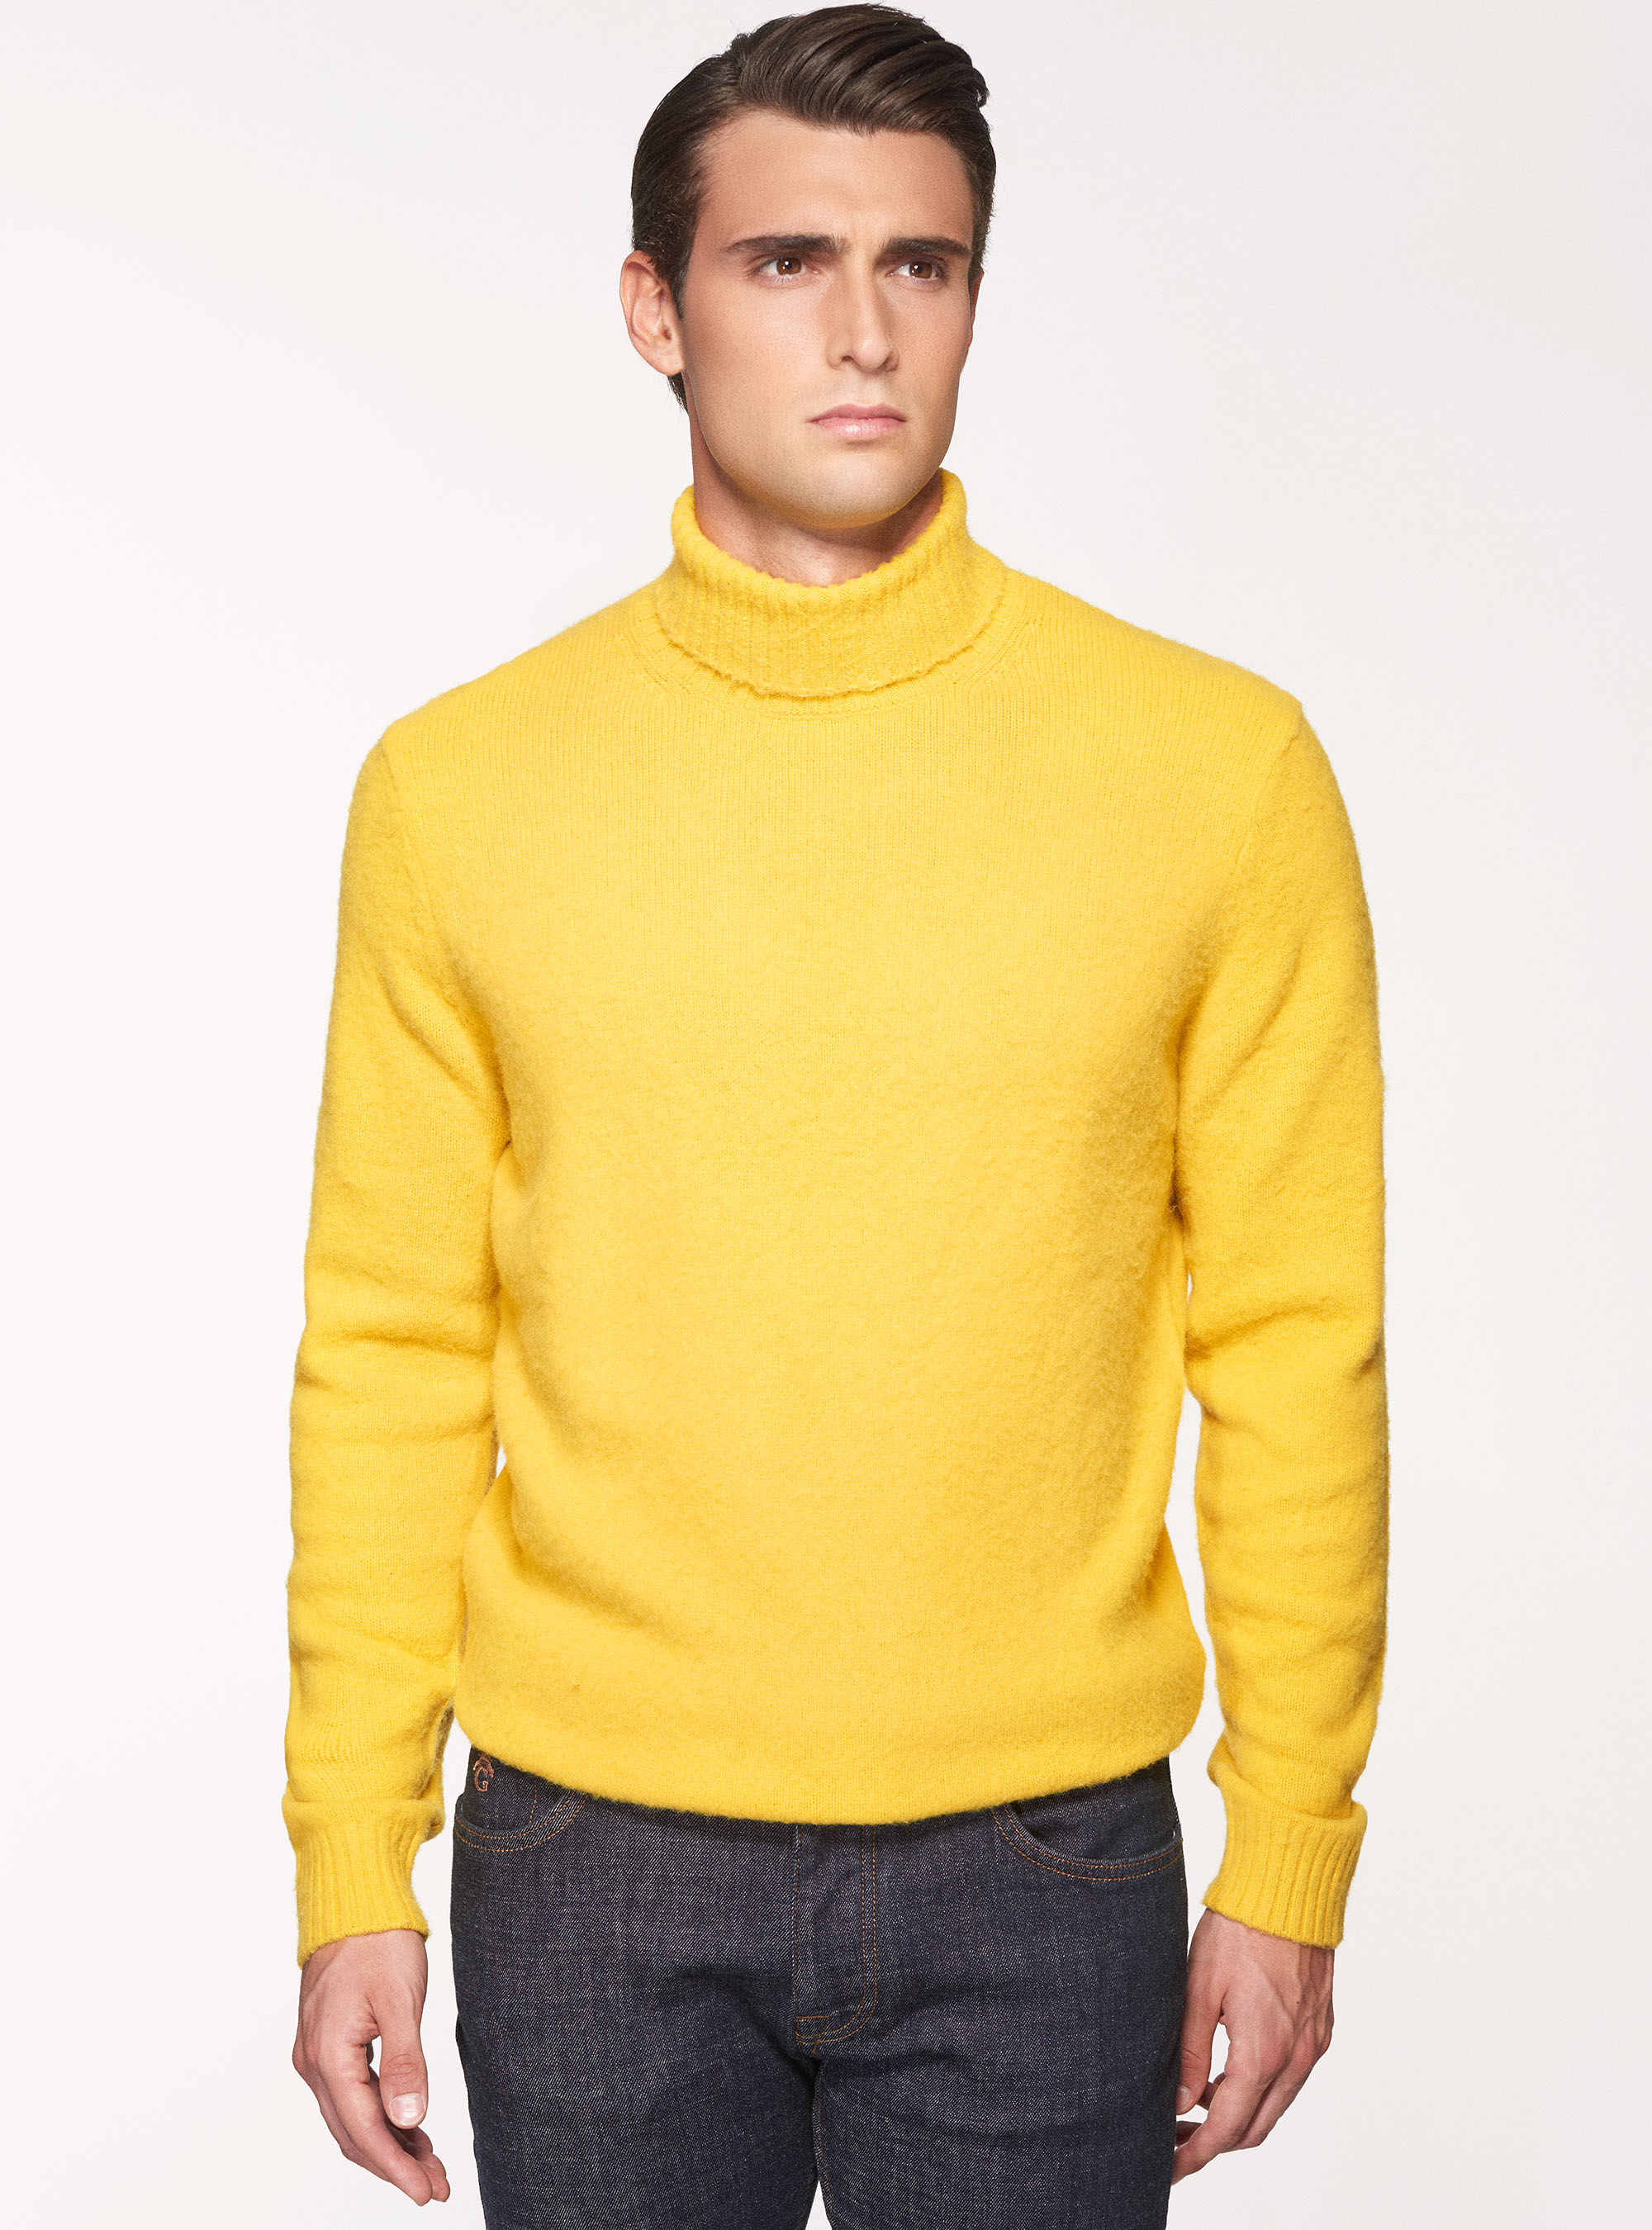 Brushed wool blend turtleneck sweater | GutteridgeUS | Men's catalog ...